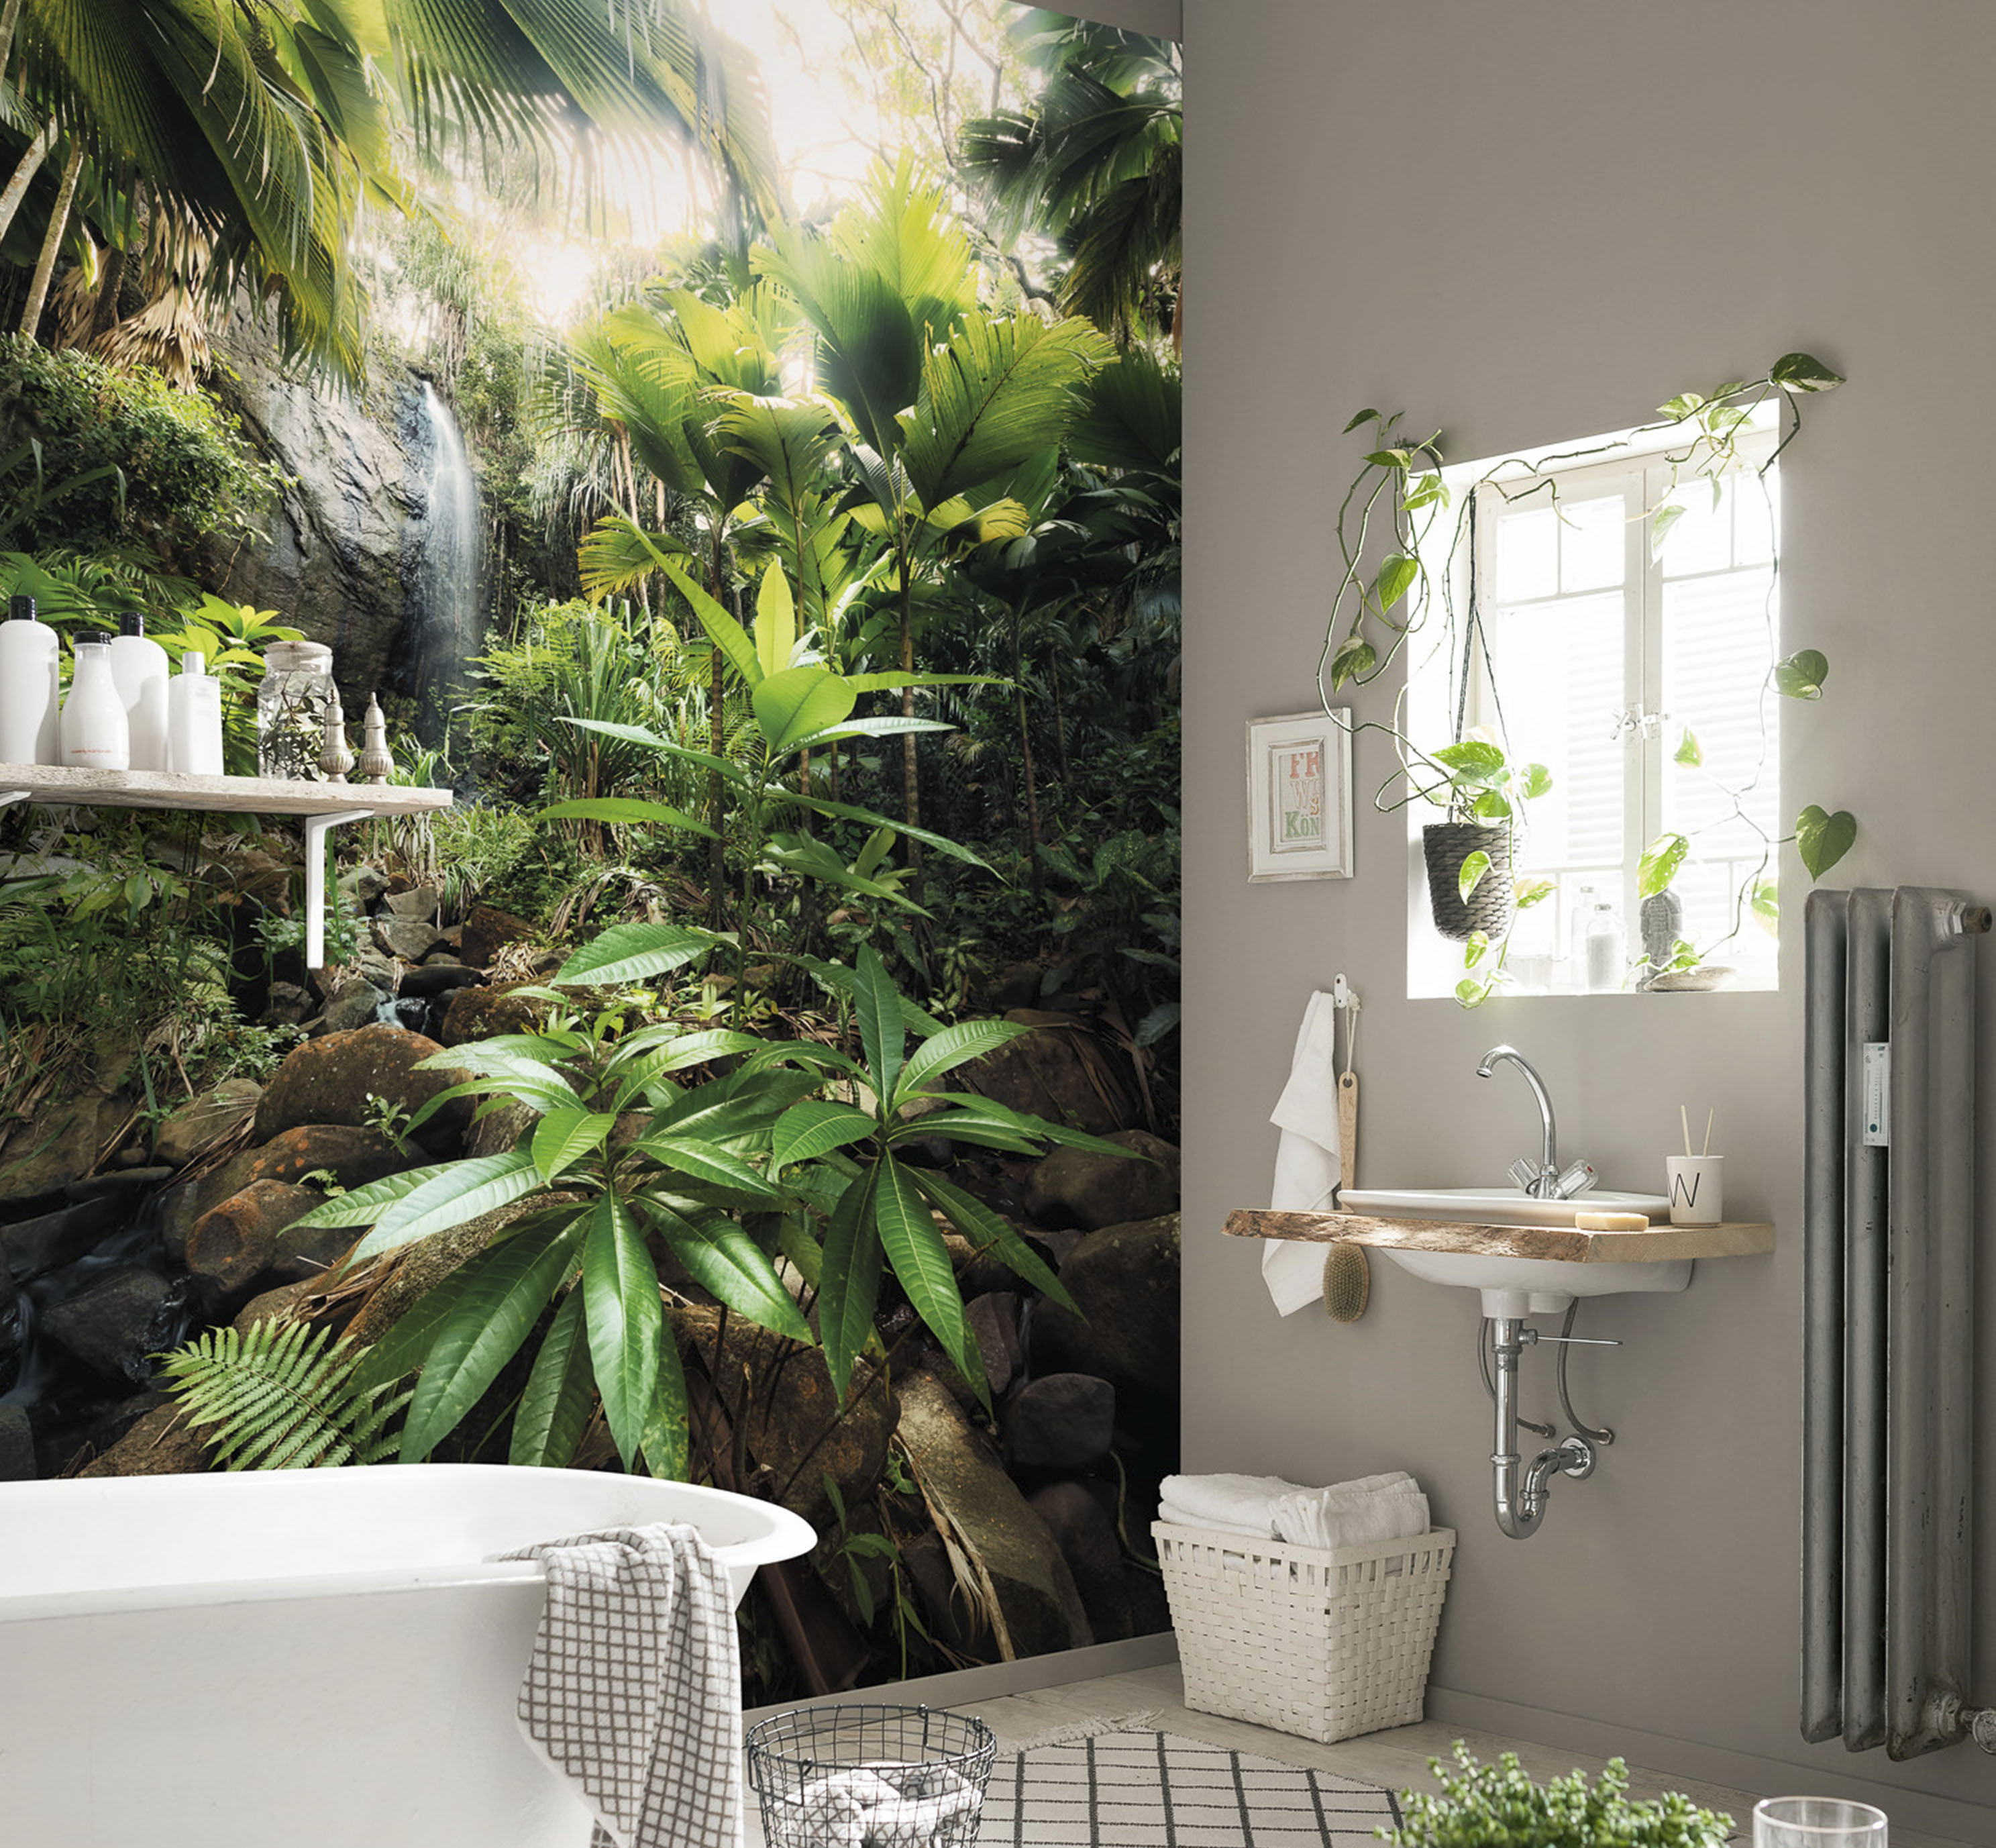 Ванна фотообои. Ванная комната в стиле джунгли. Плитка в тропическом стиле. Фотообои на стену. Фотообои в интерьере.